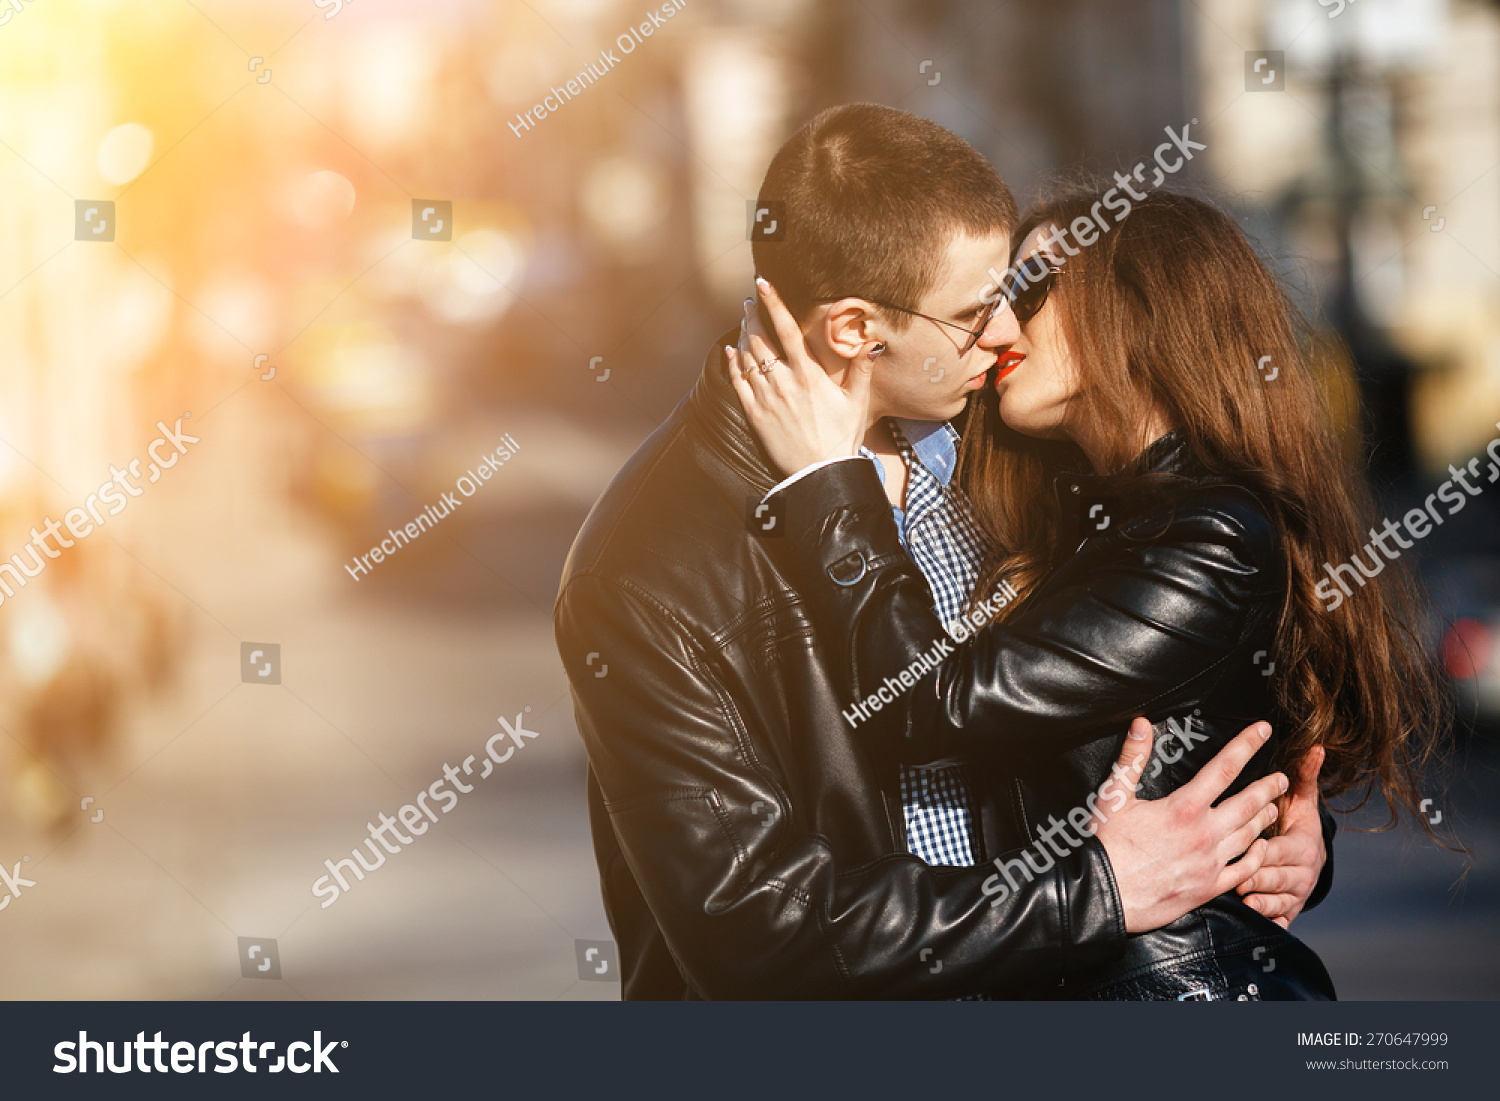 Beautiful Couple Posing On A City Street Stock Photo 270647999 ...